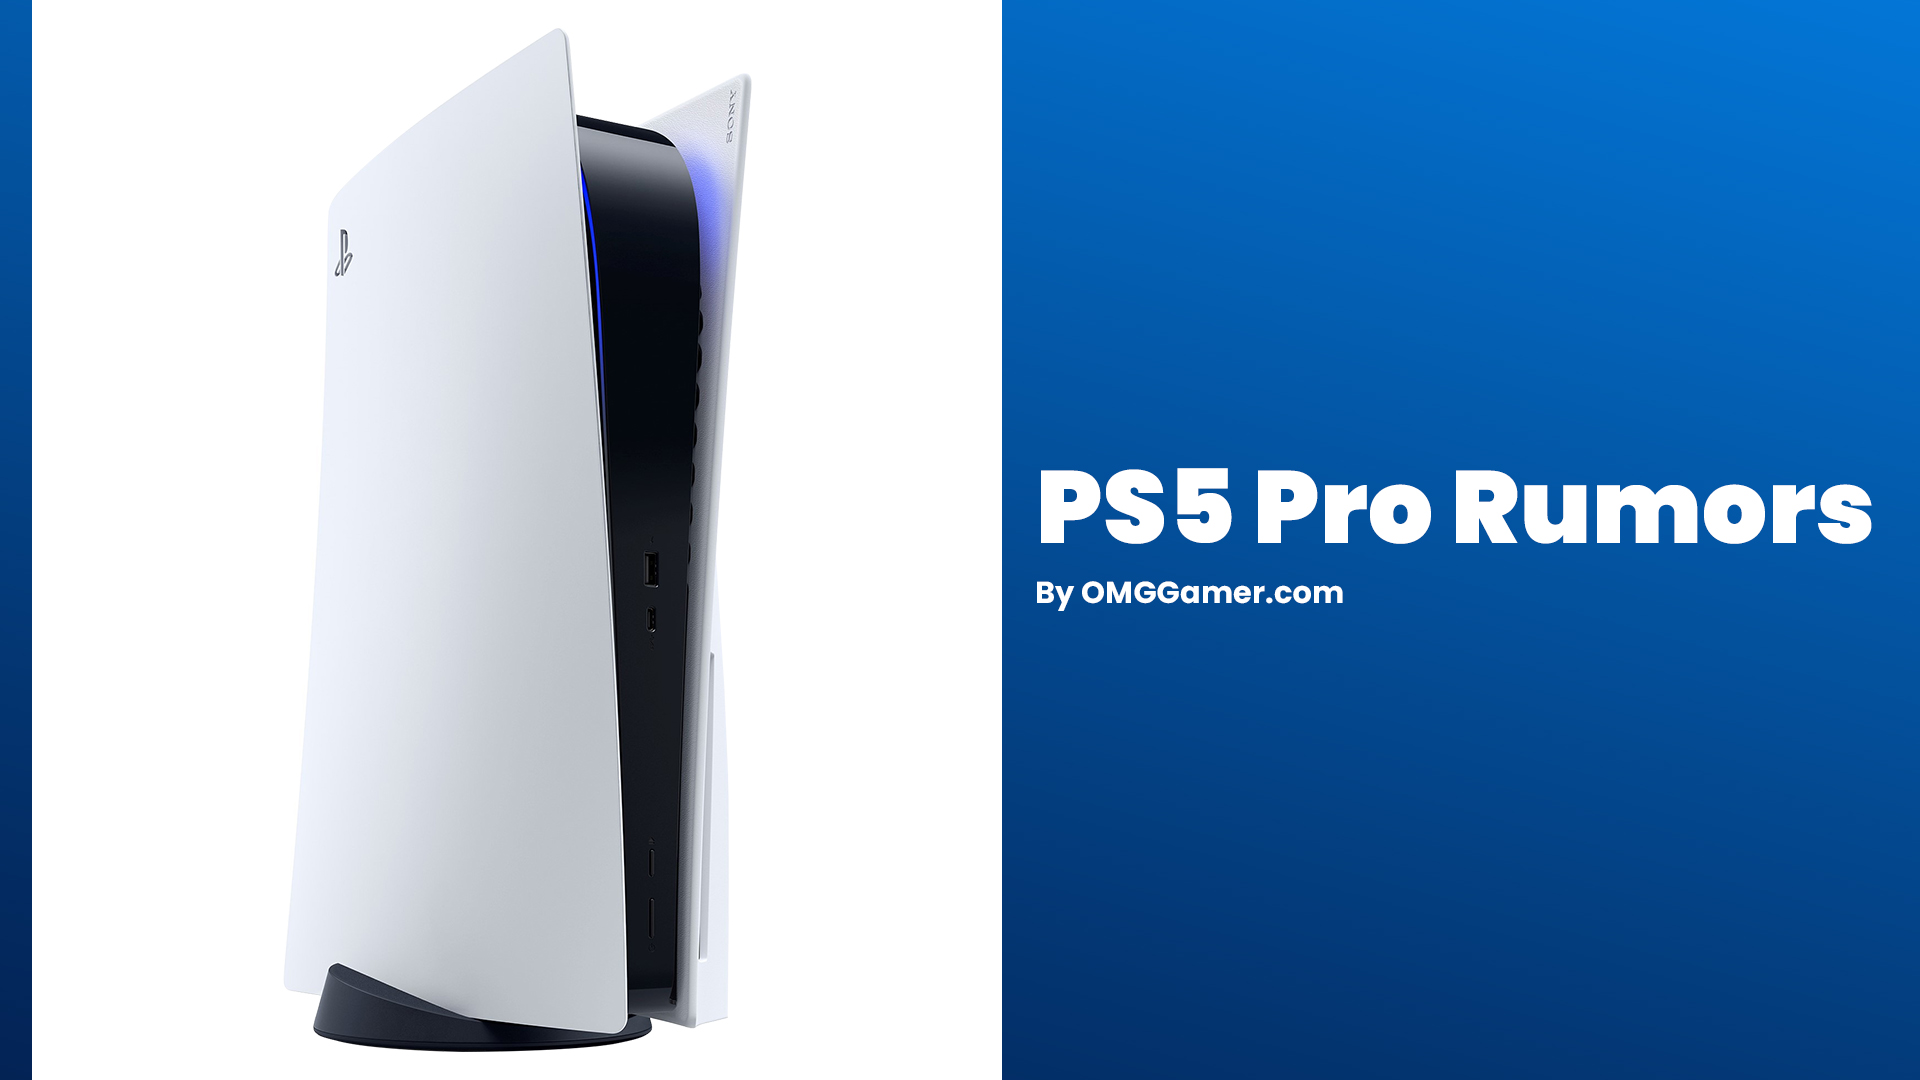 PS5 Pro Rumors